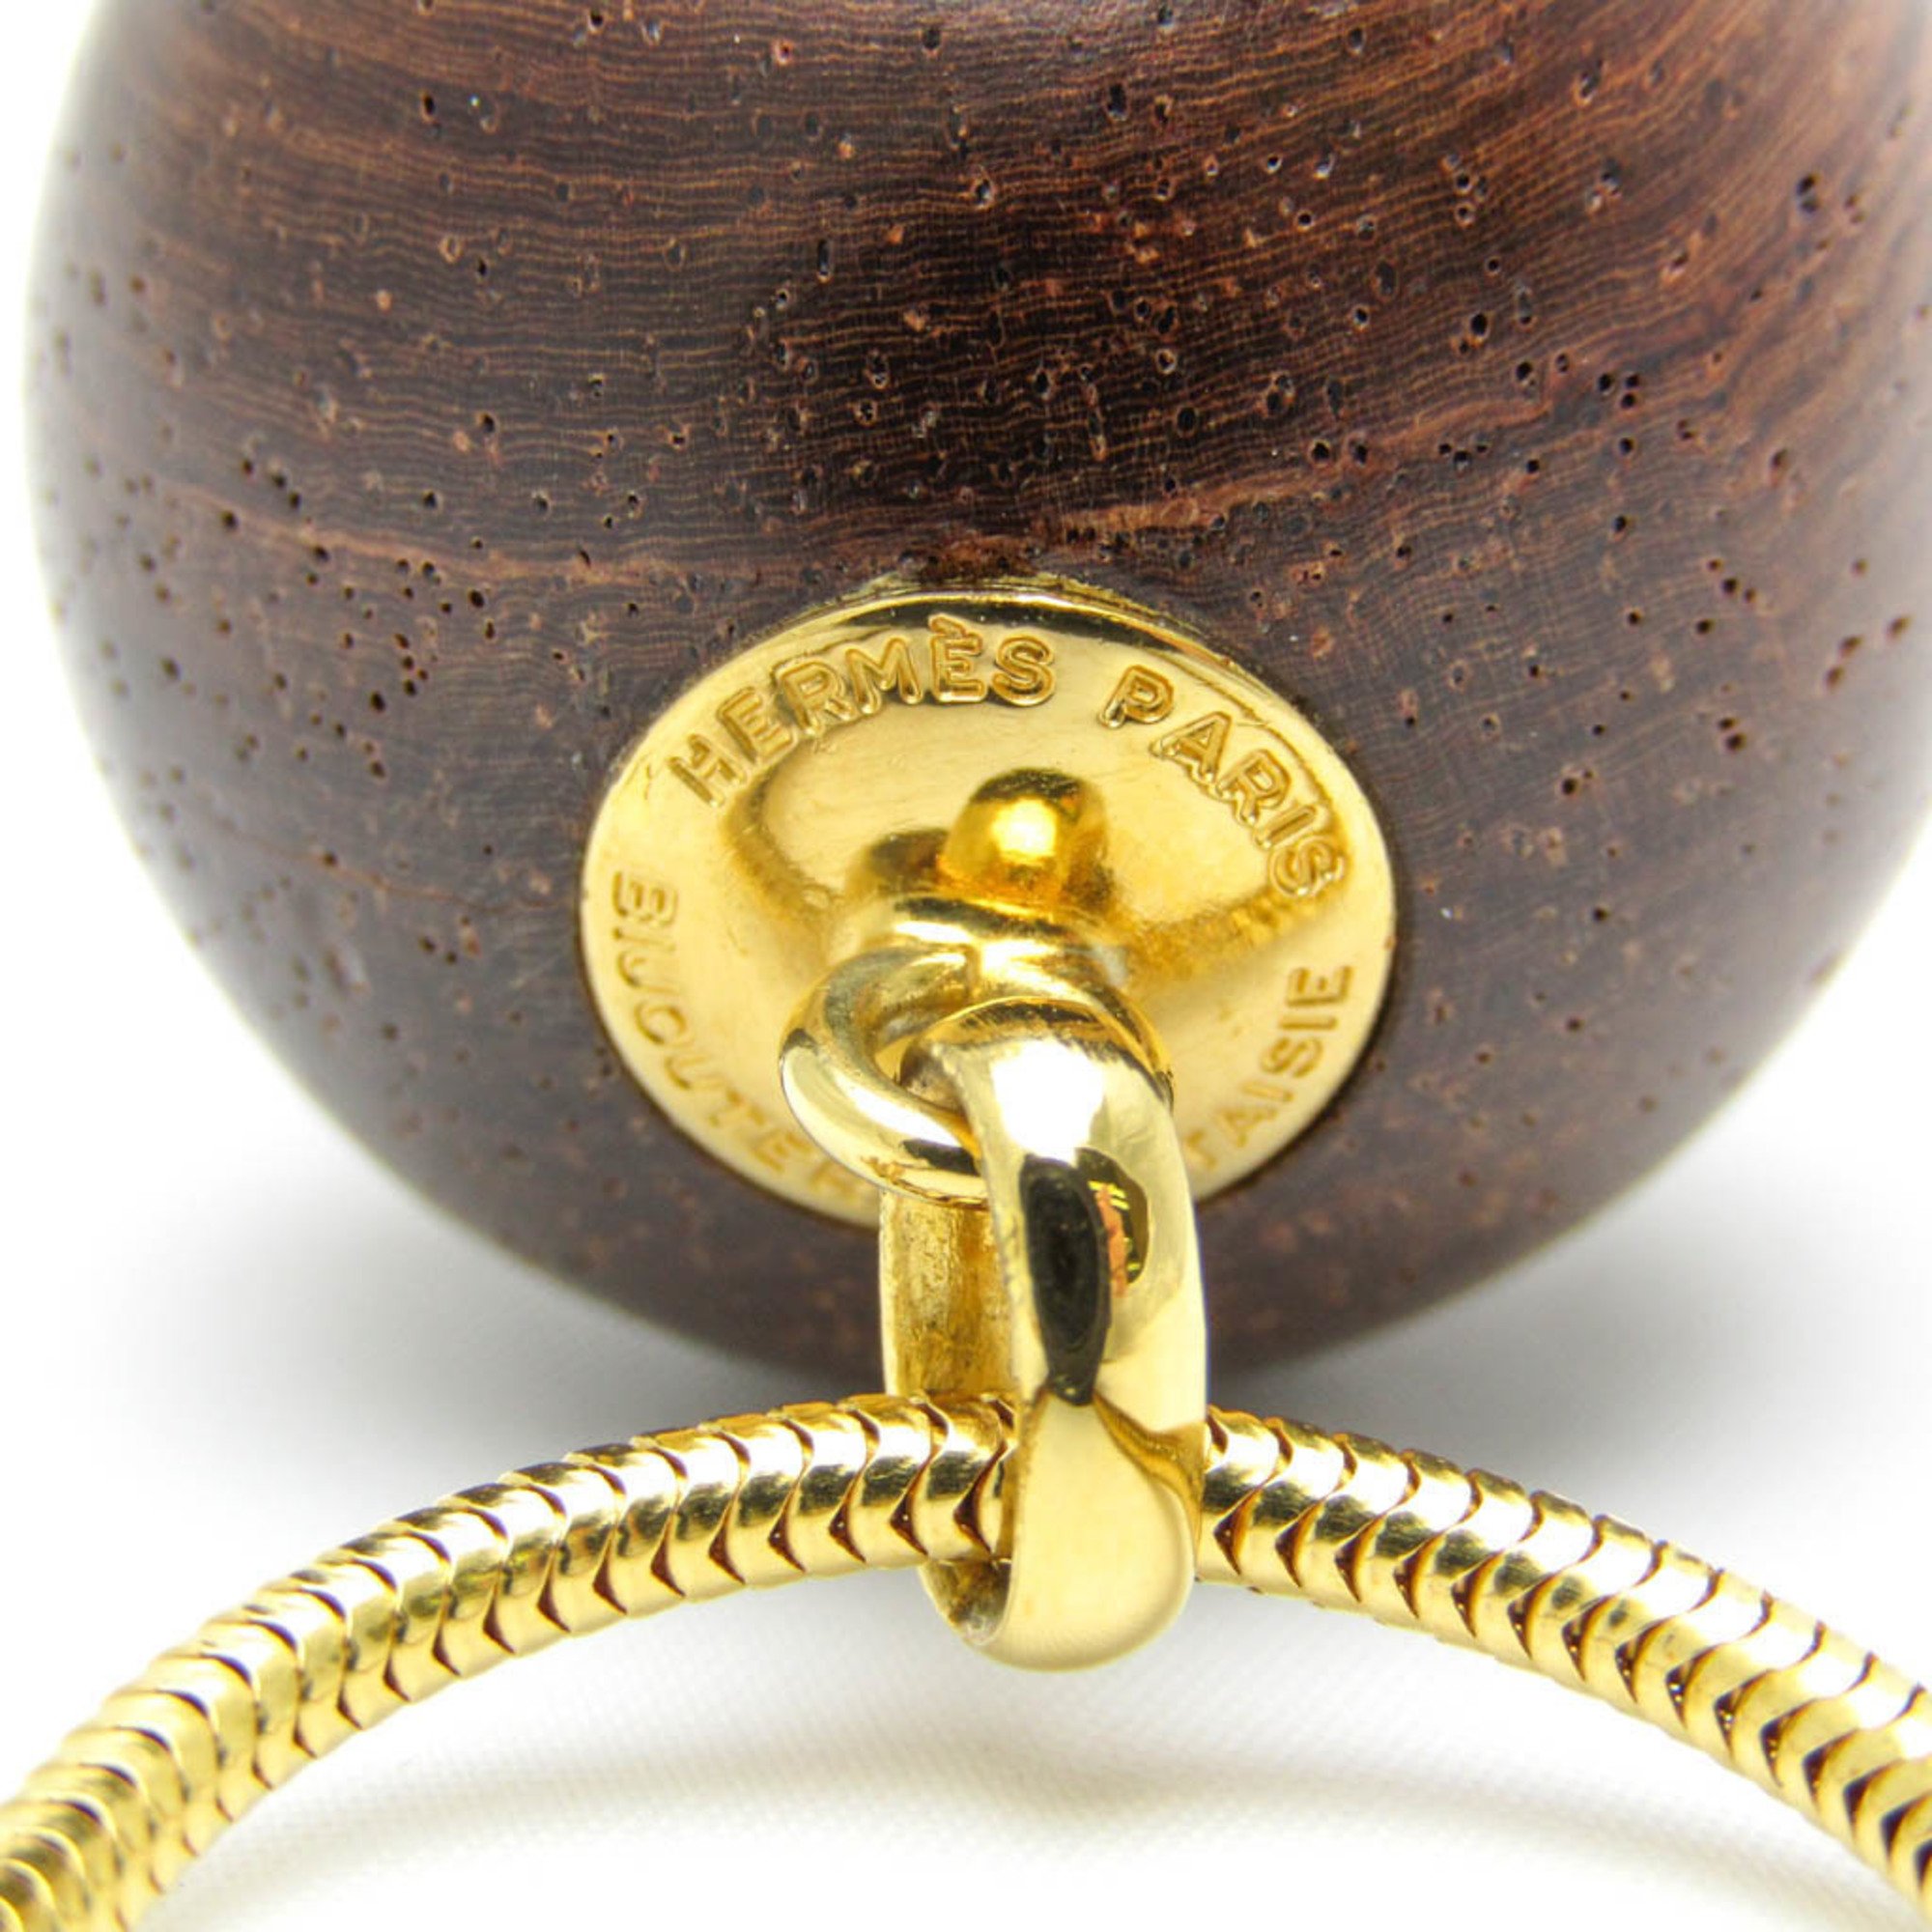 Hermes Serie Wood Ball Metal,Wood Women's Pendant Necklace (Dark Brown,Gold)